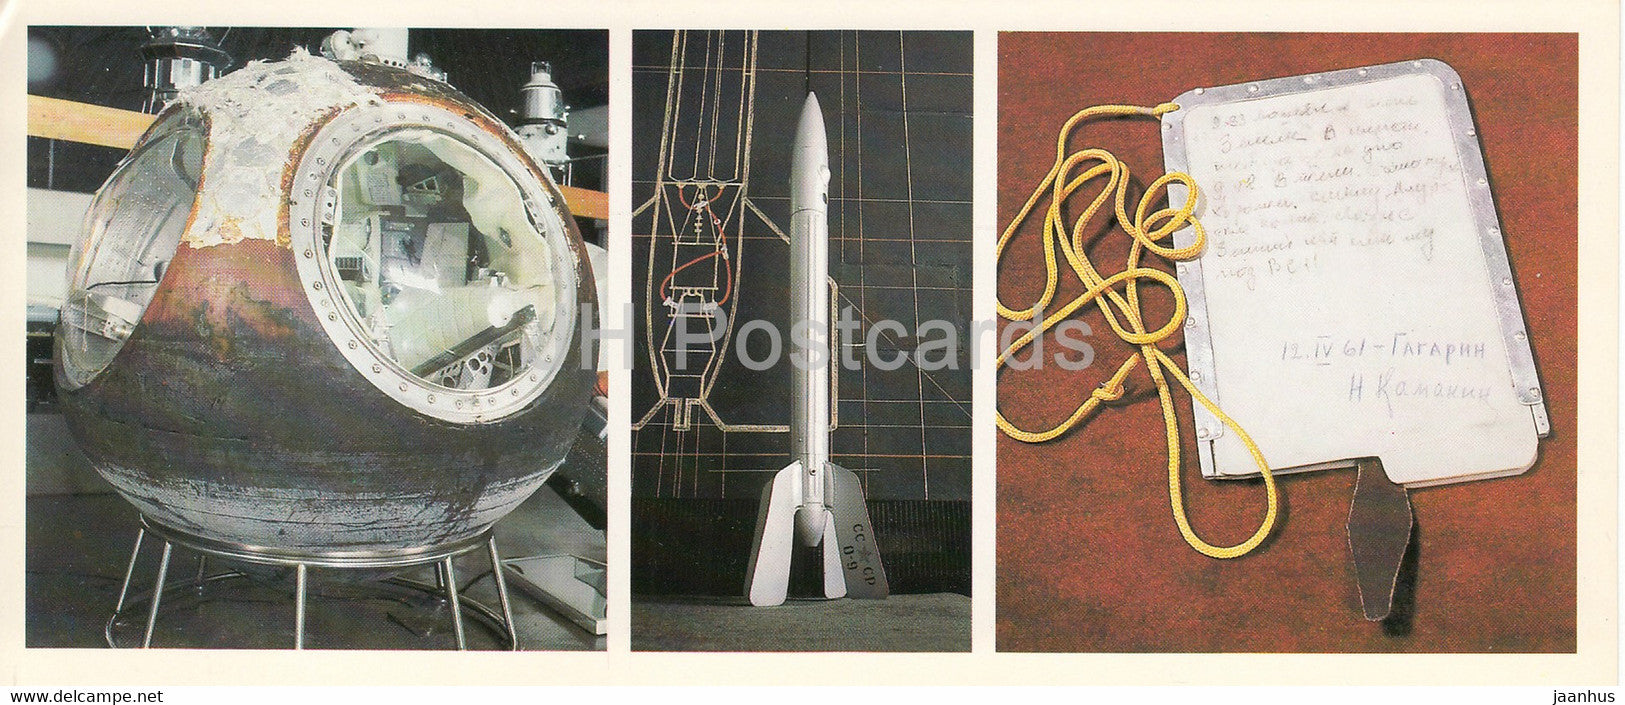 Vostok 5 Lander - rocket - Gagarin logbook - State Museum of the History of Cosmonautics - 1984 - Russia USSR - unused - JH Postcards